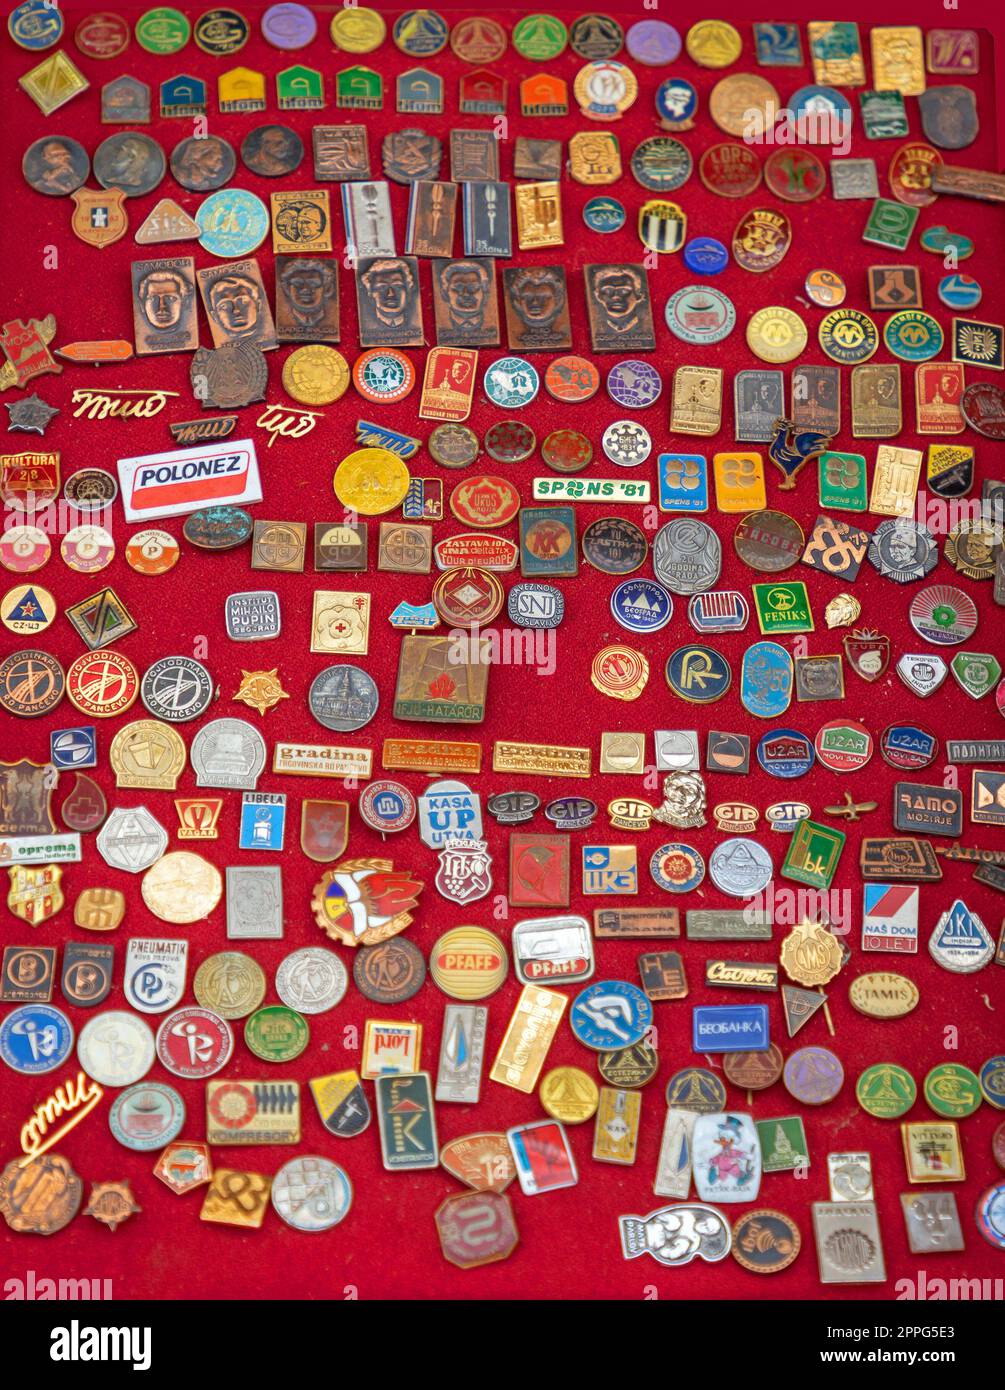 Retro pin badges on flea market Stock Photo